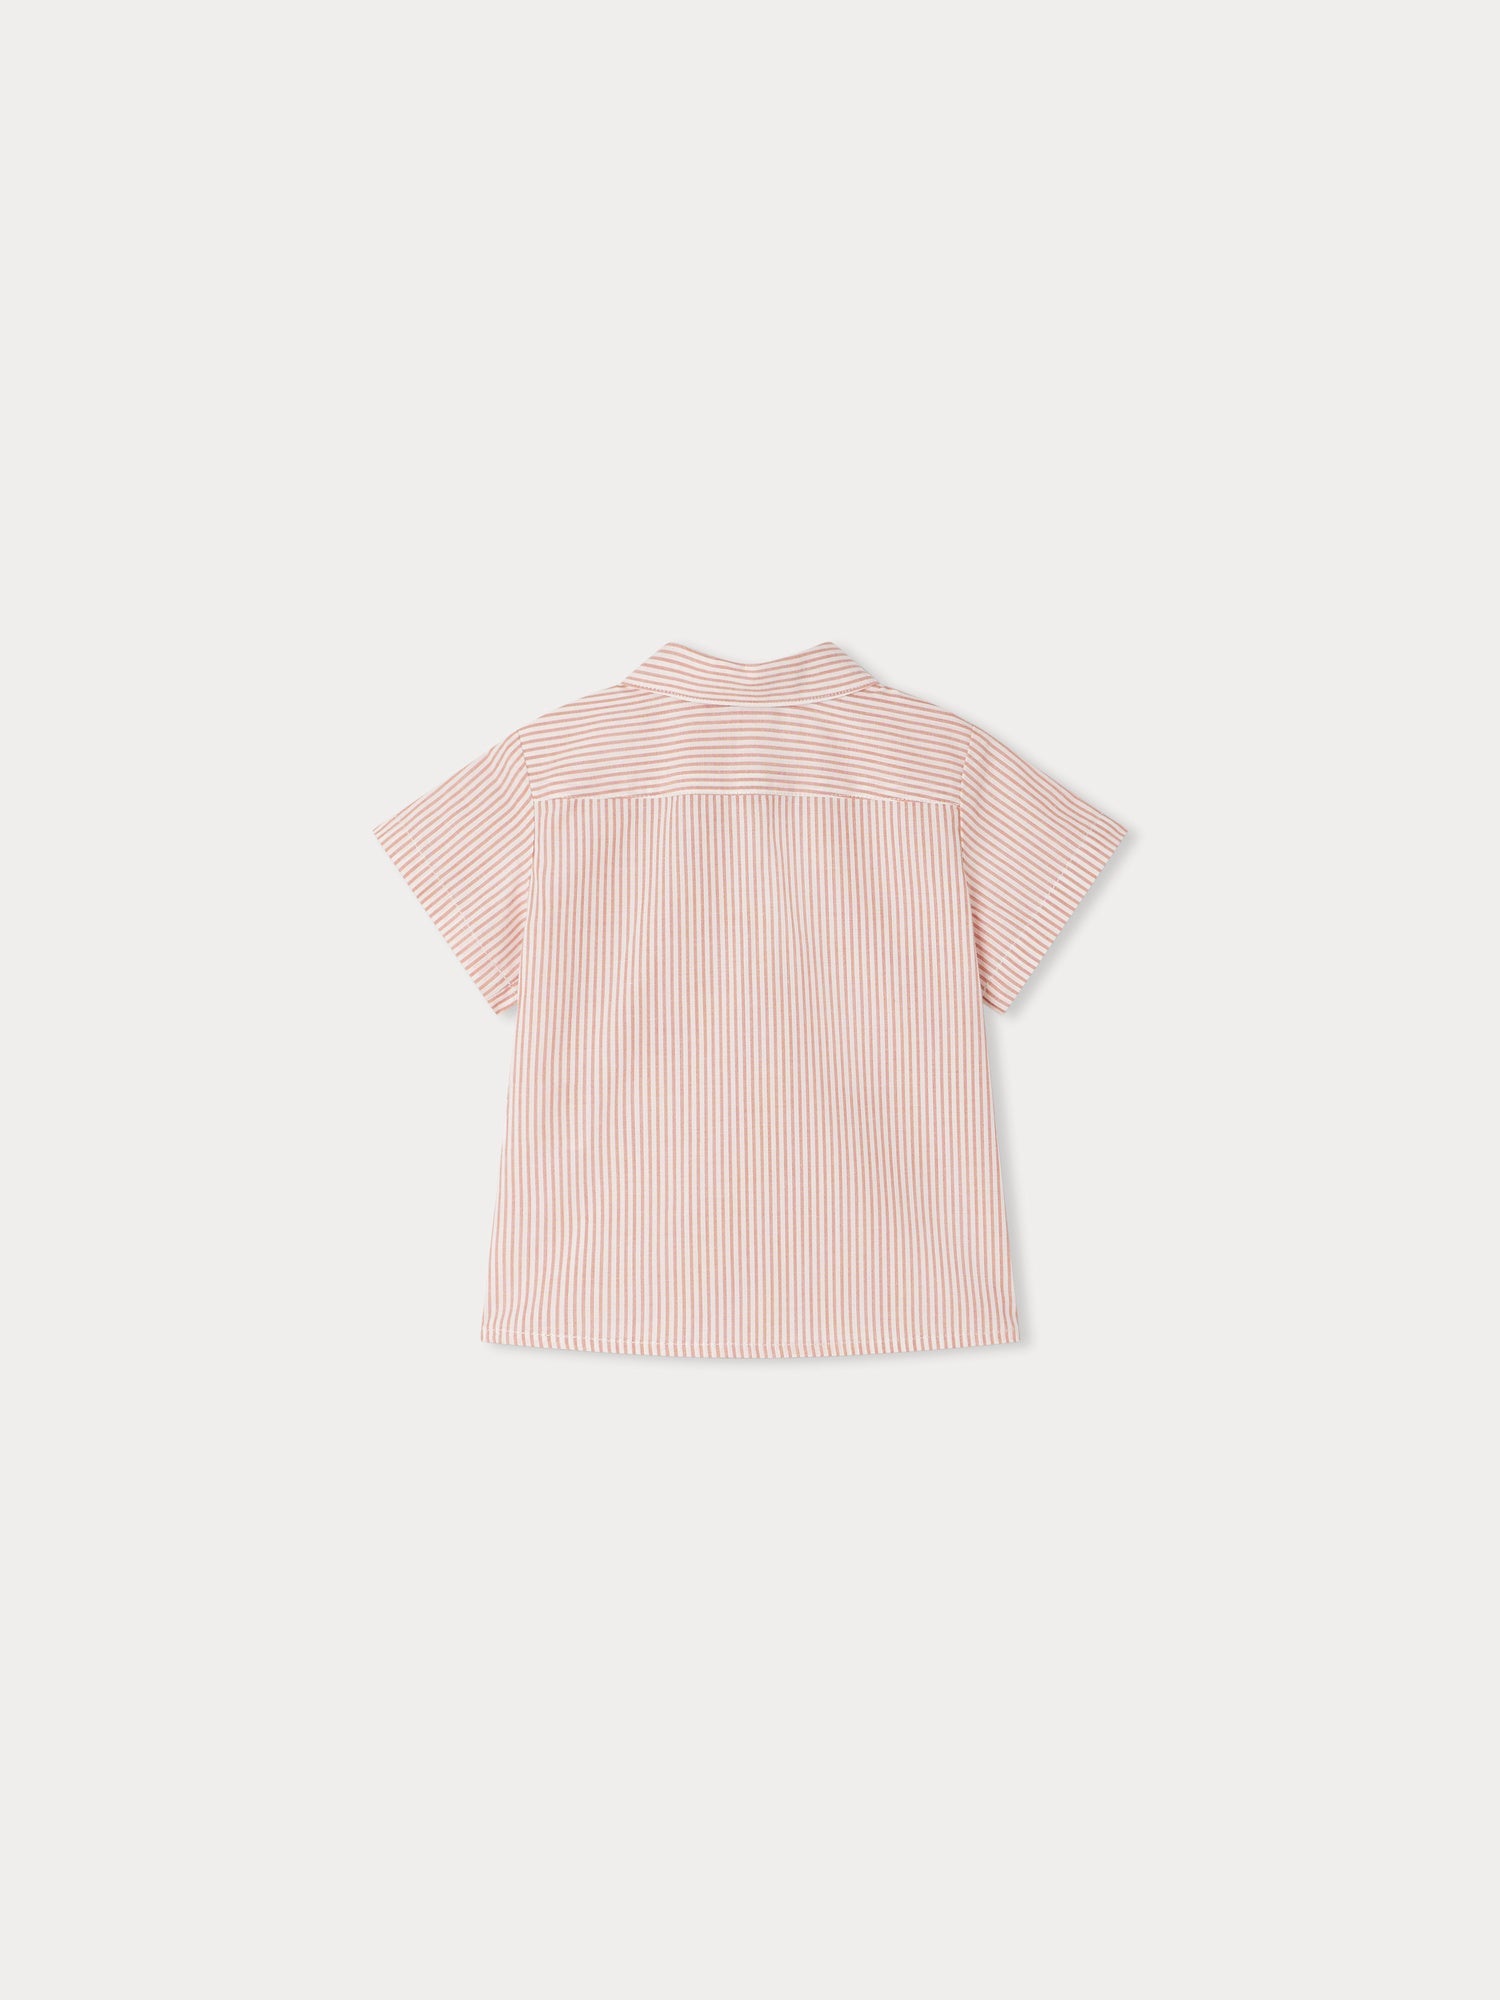 Baby Boys Pink Stripes Cotton Shirt